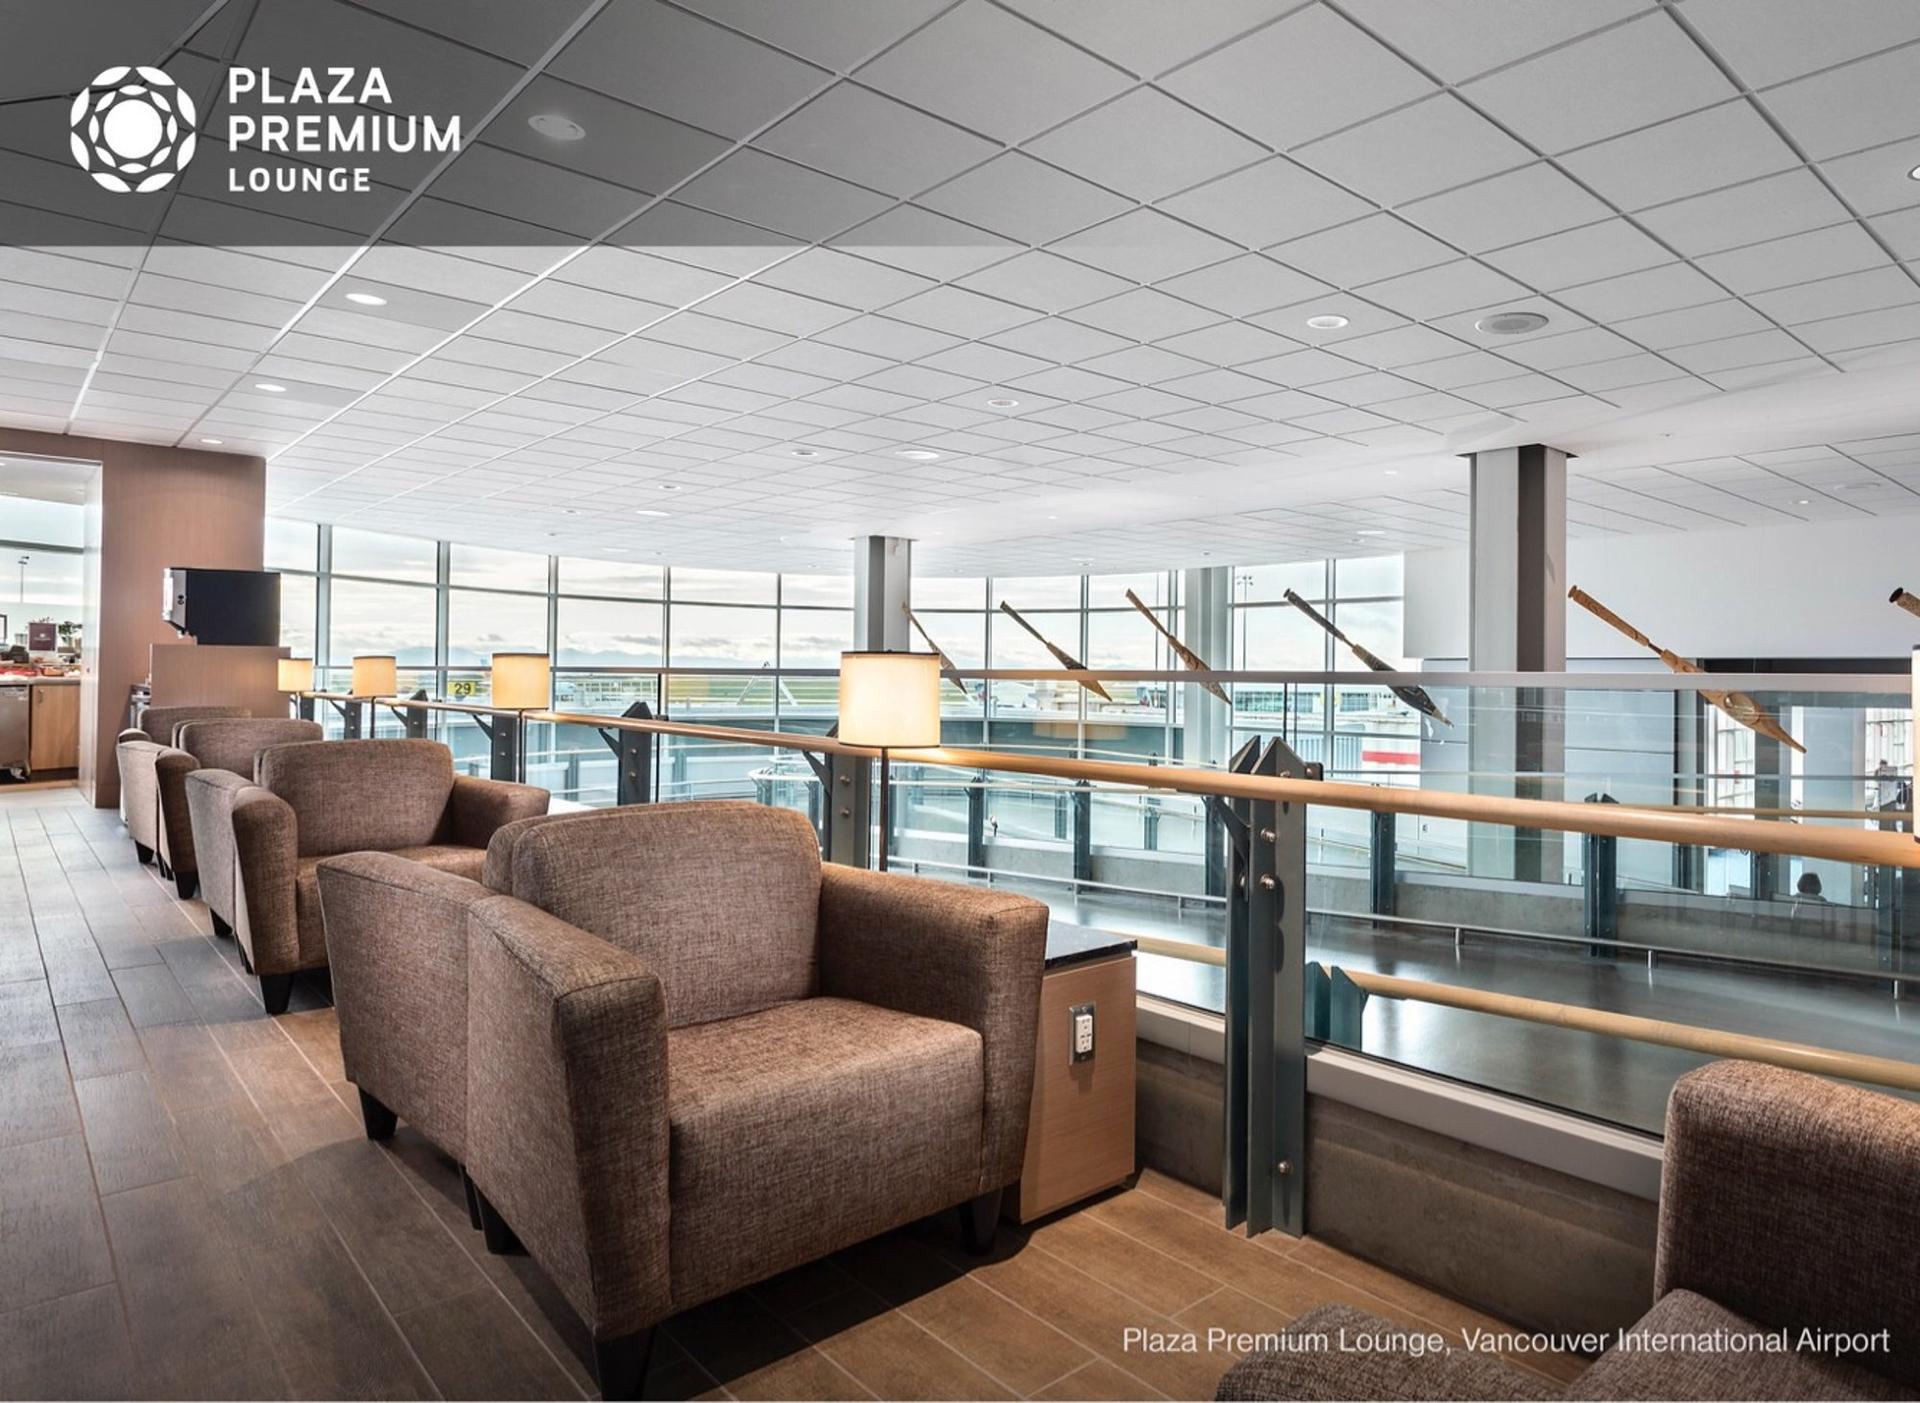 Plaza Premium Lounge (Domestic Gate C29) image 9 of 17